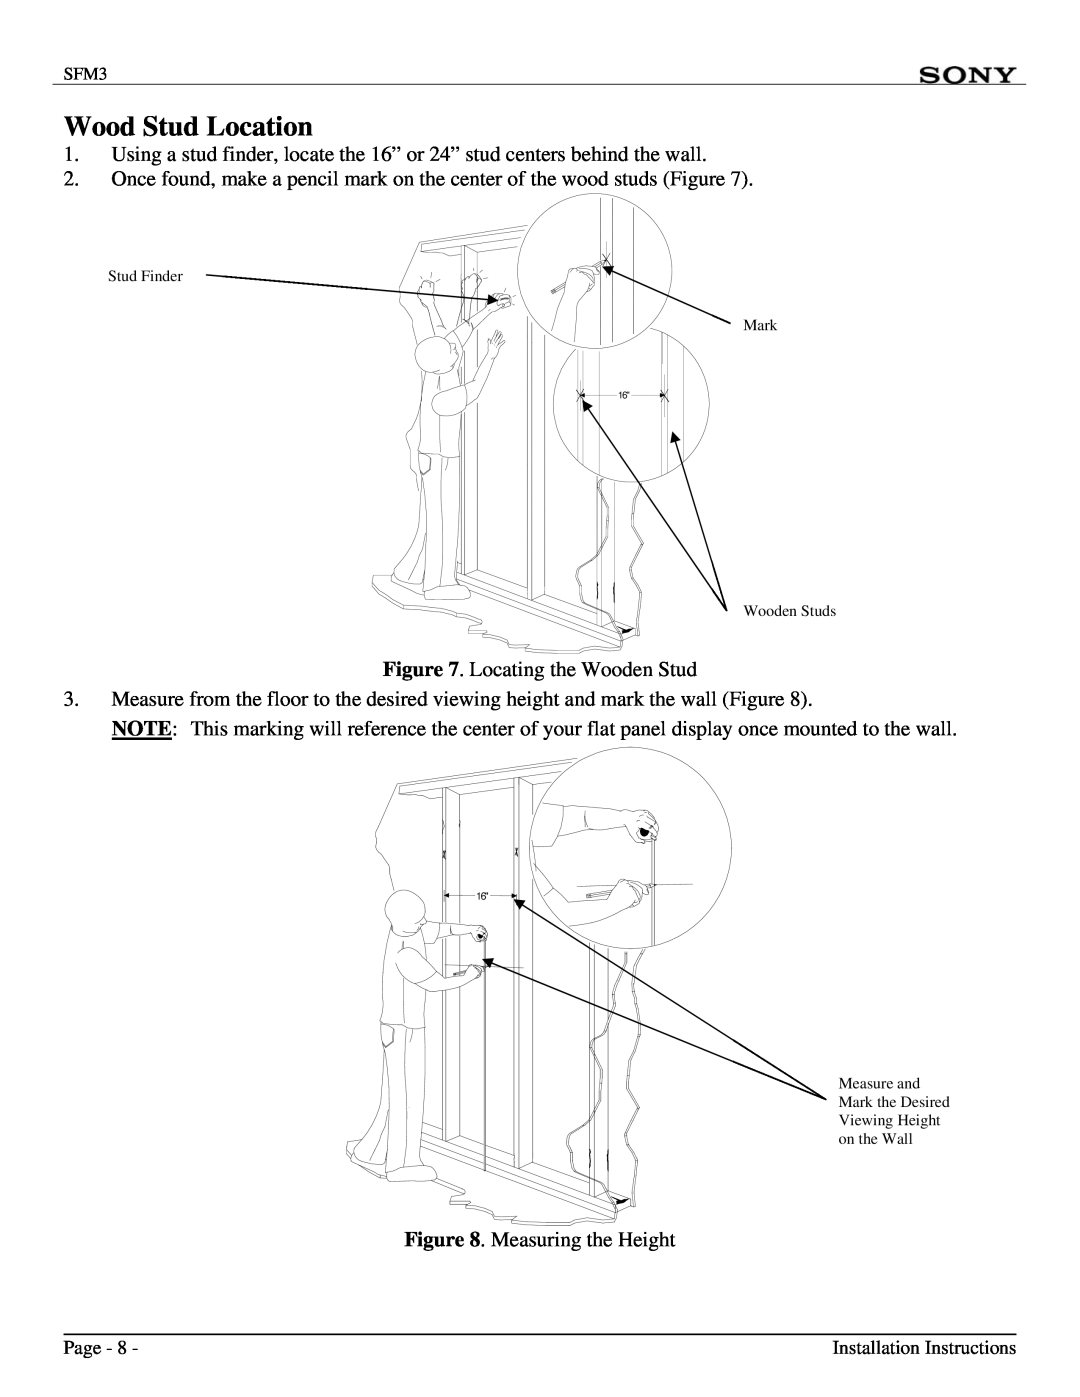 Sony SFM3 installation manual Wood Stud Location 